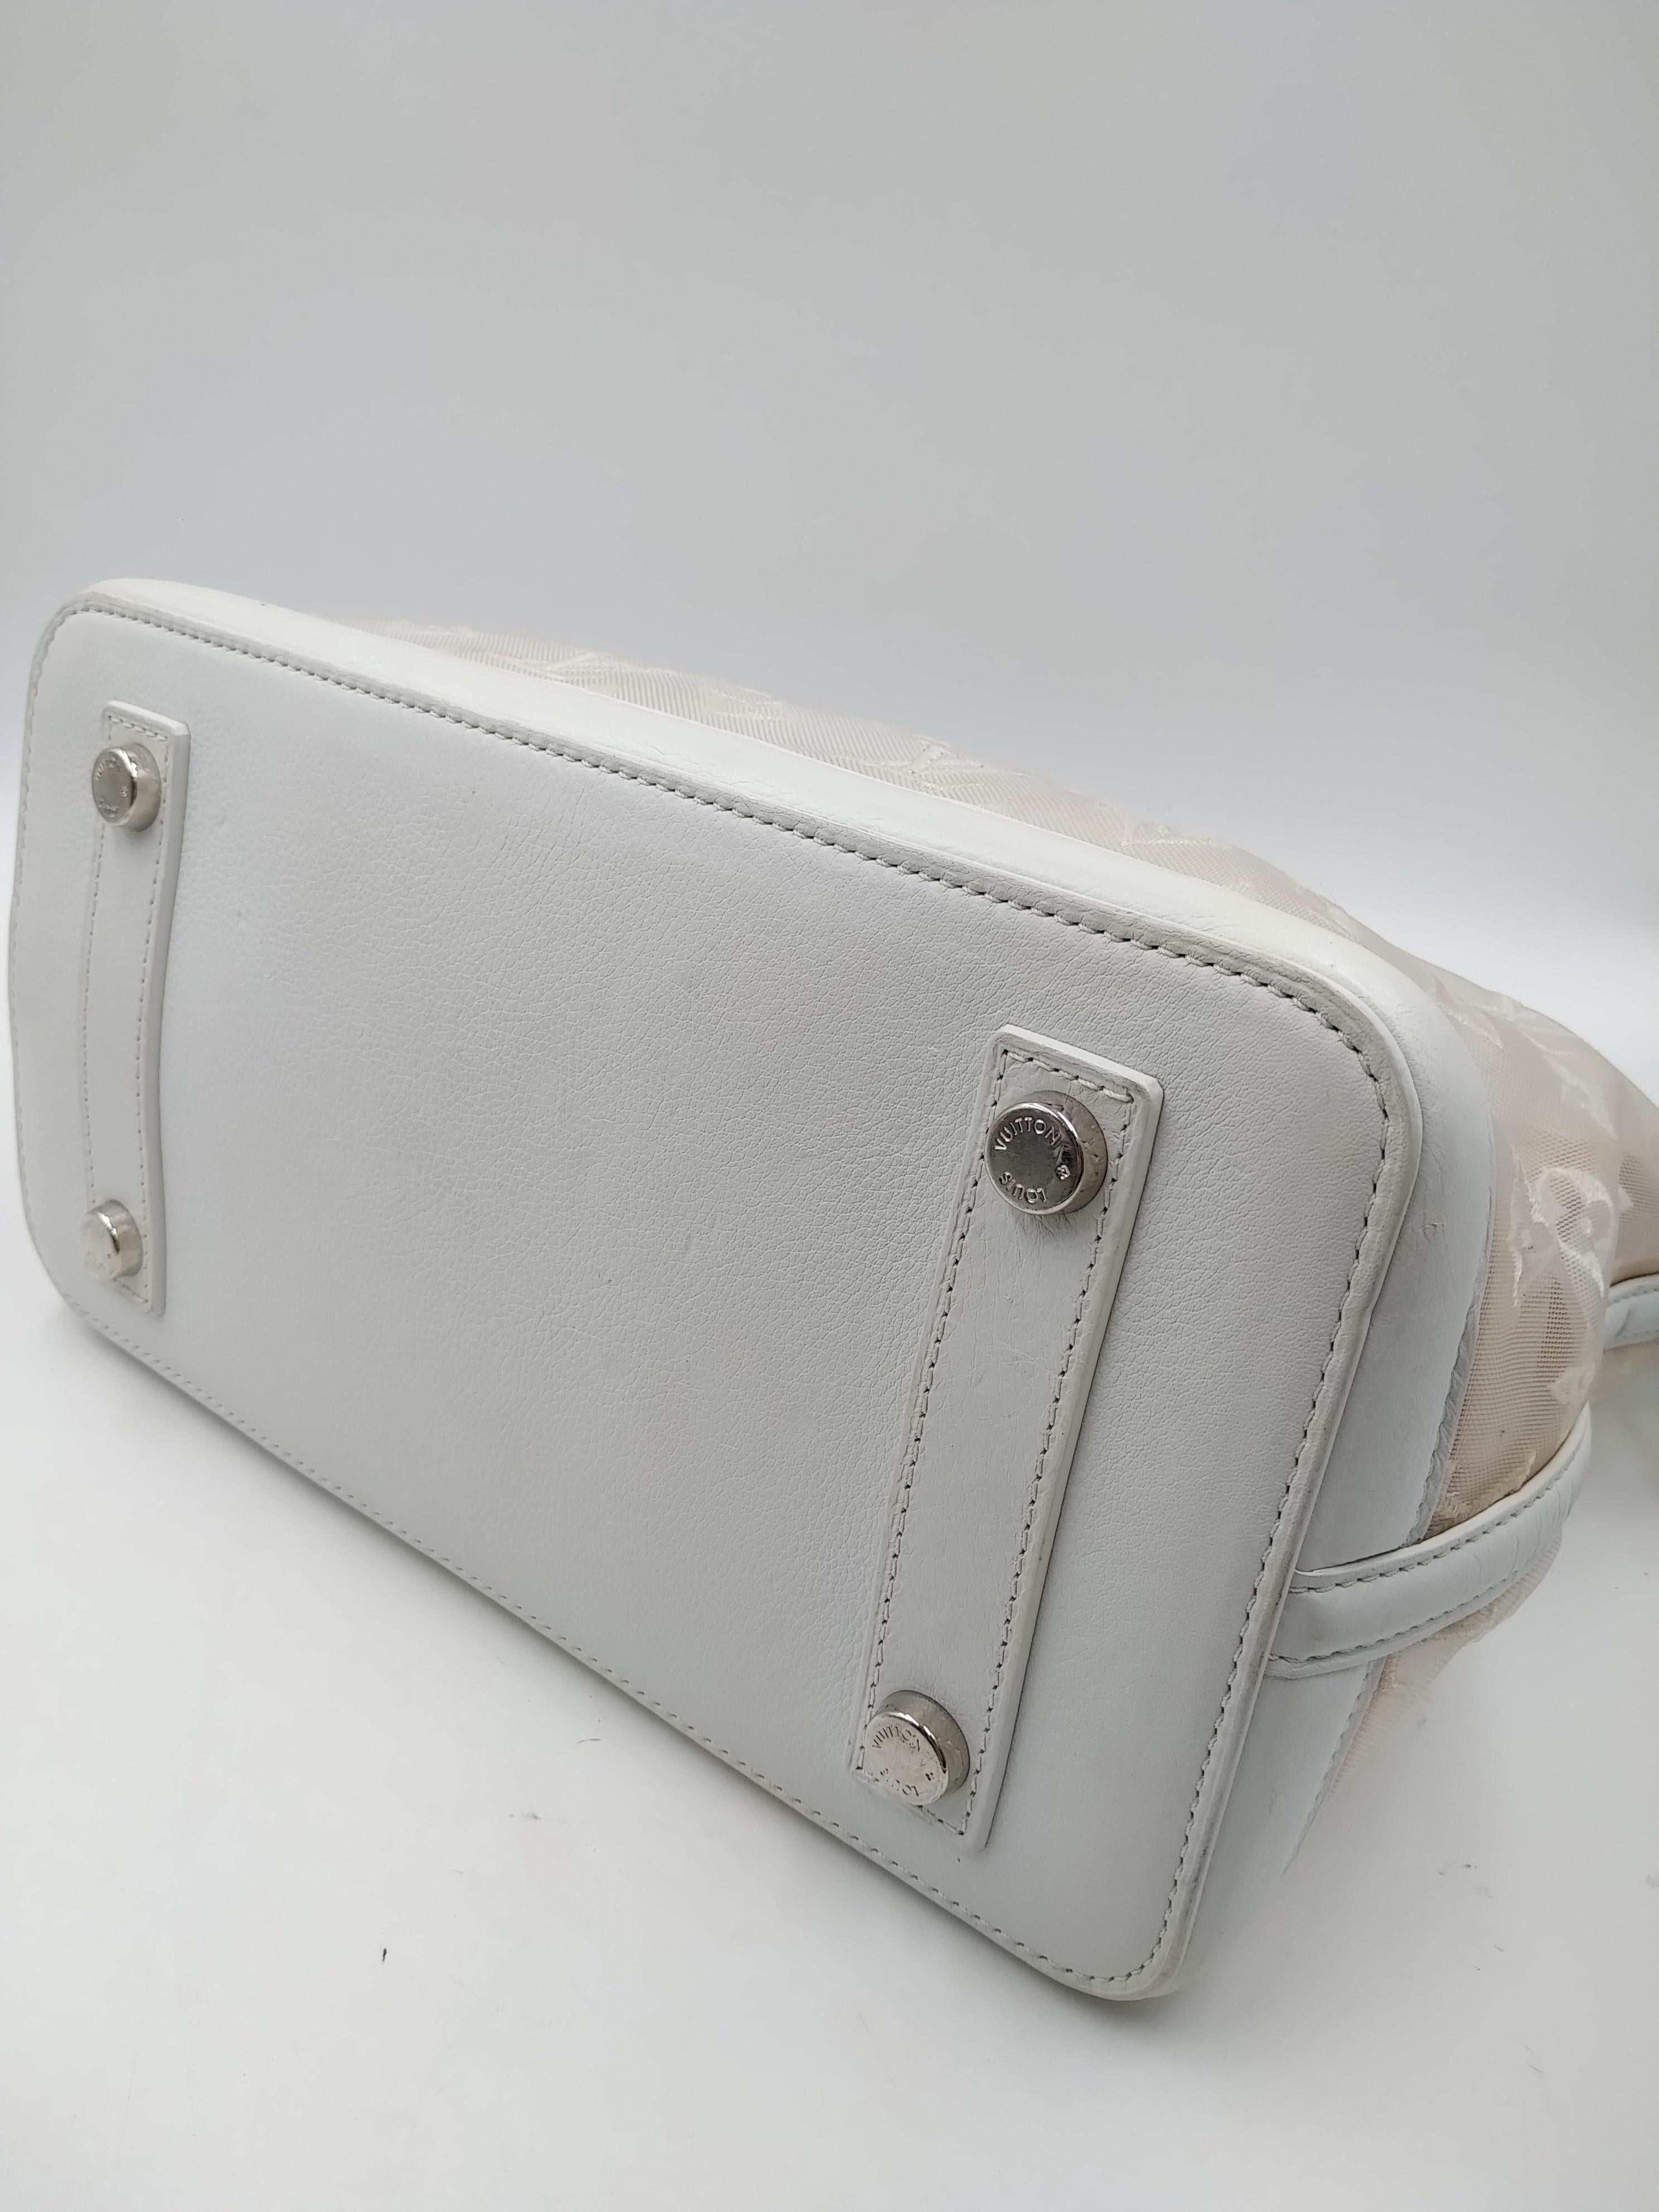 Louis Vuitton Limited Edition Monogram Transparence Lockit Bag 2012 For Sale 1